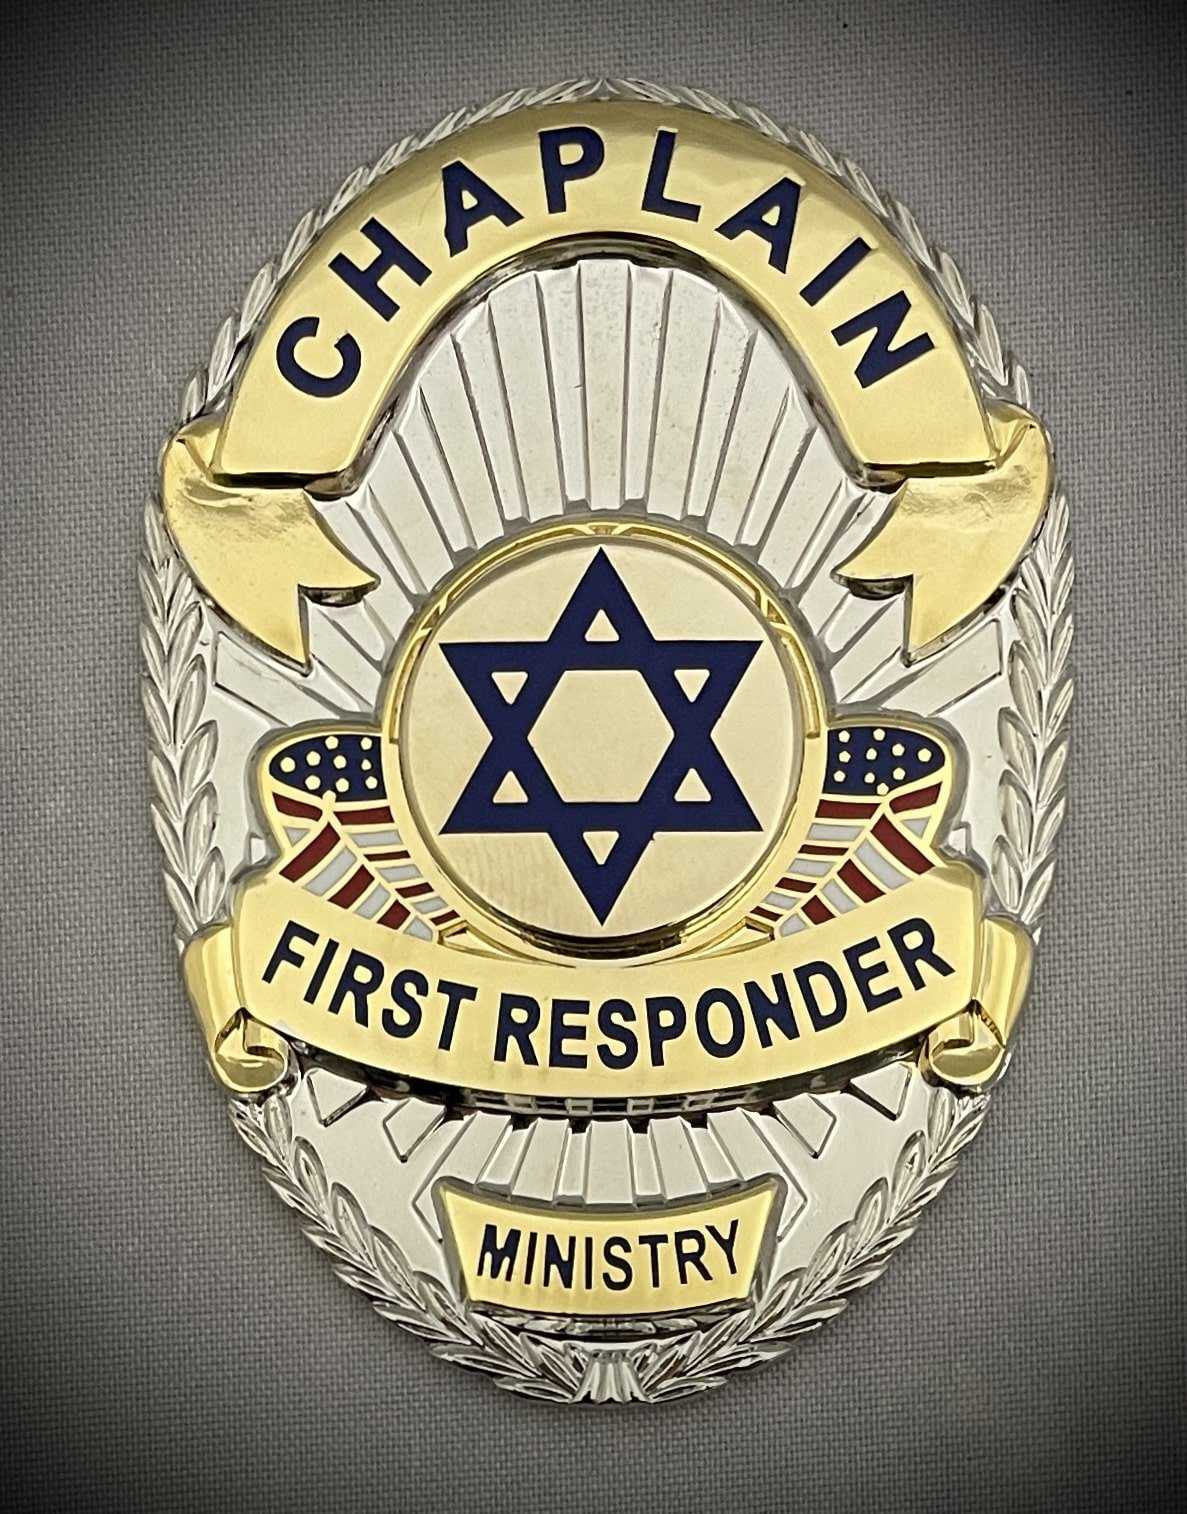 Chaplain First Responder (Acrylic Holder)